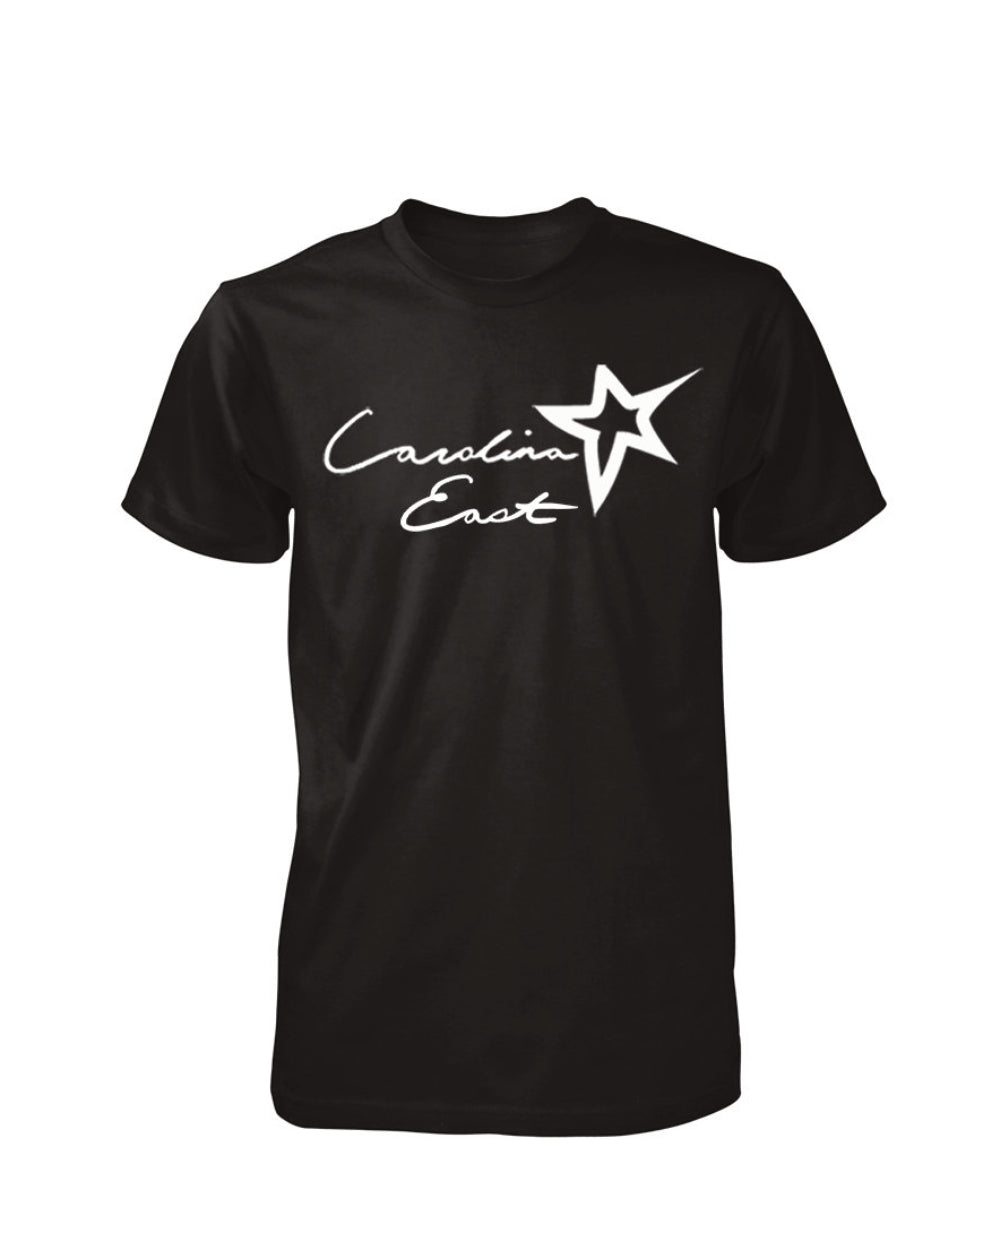 Carolina East - (T-shirt)